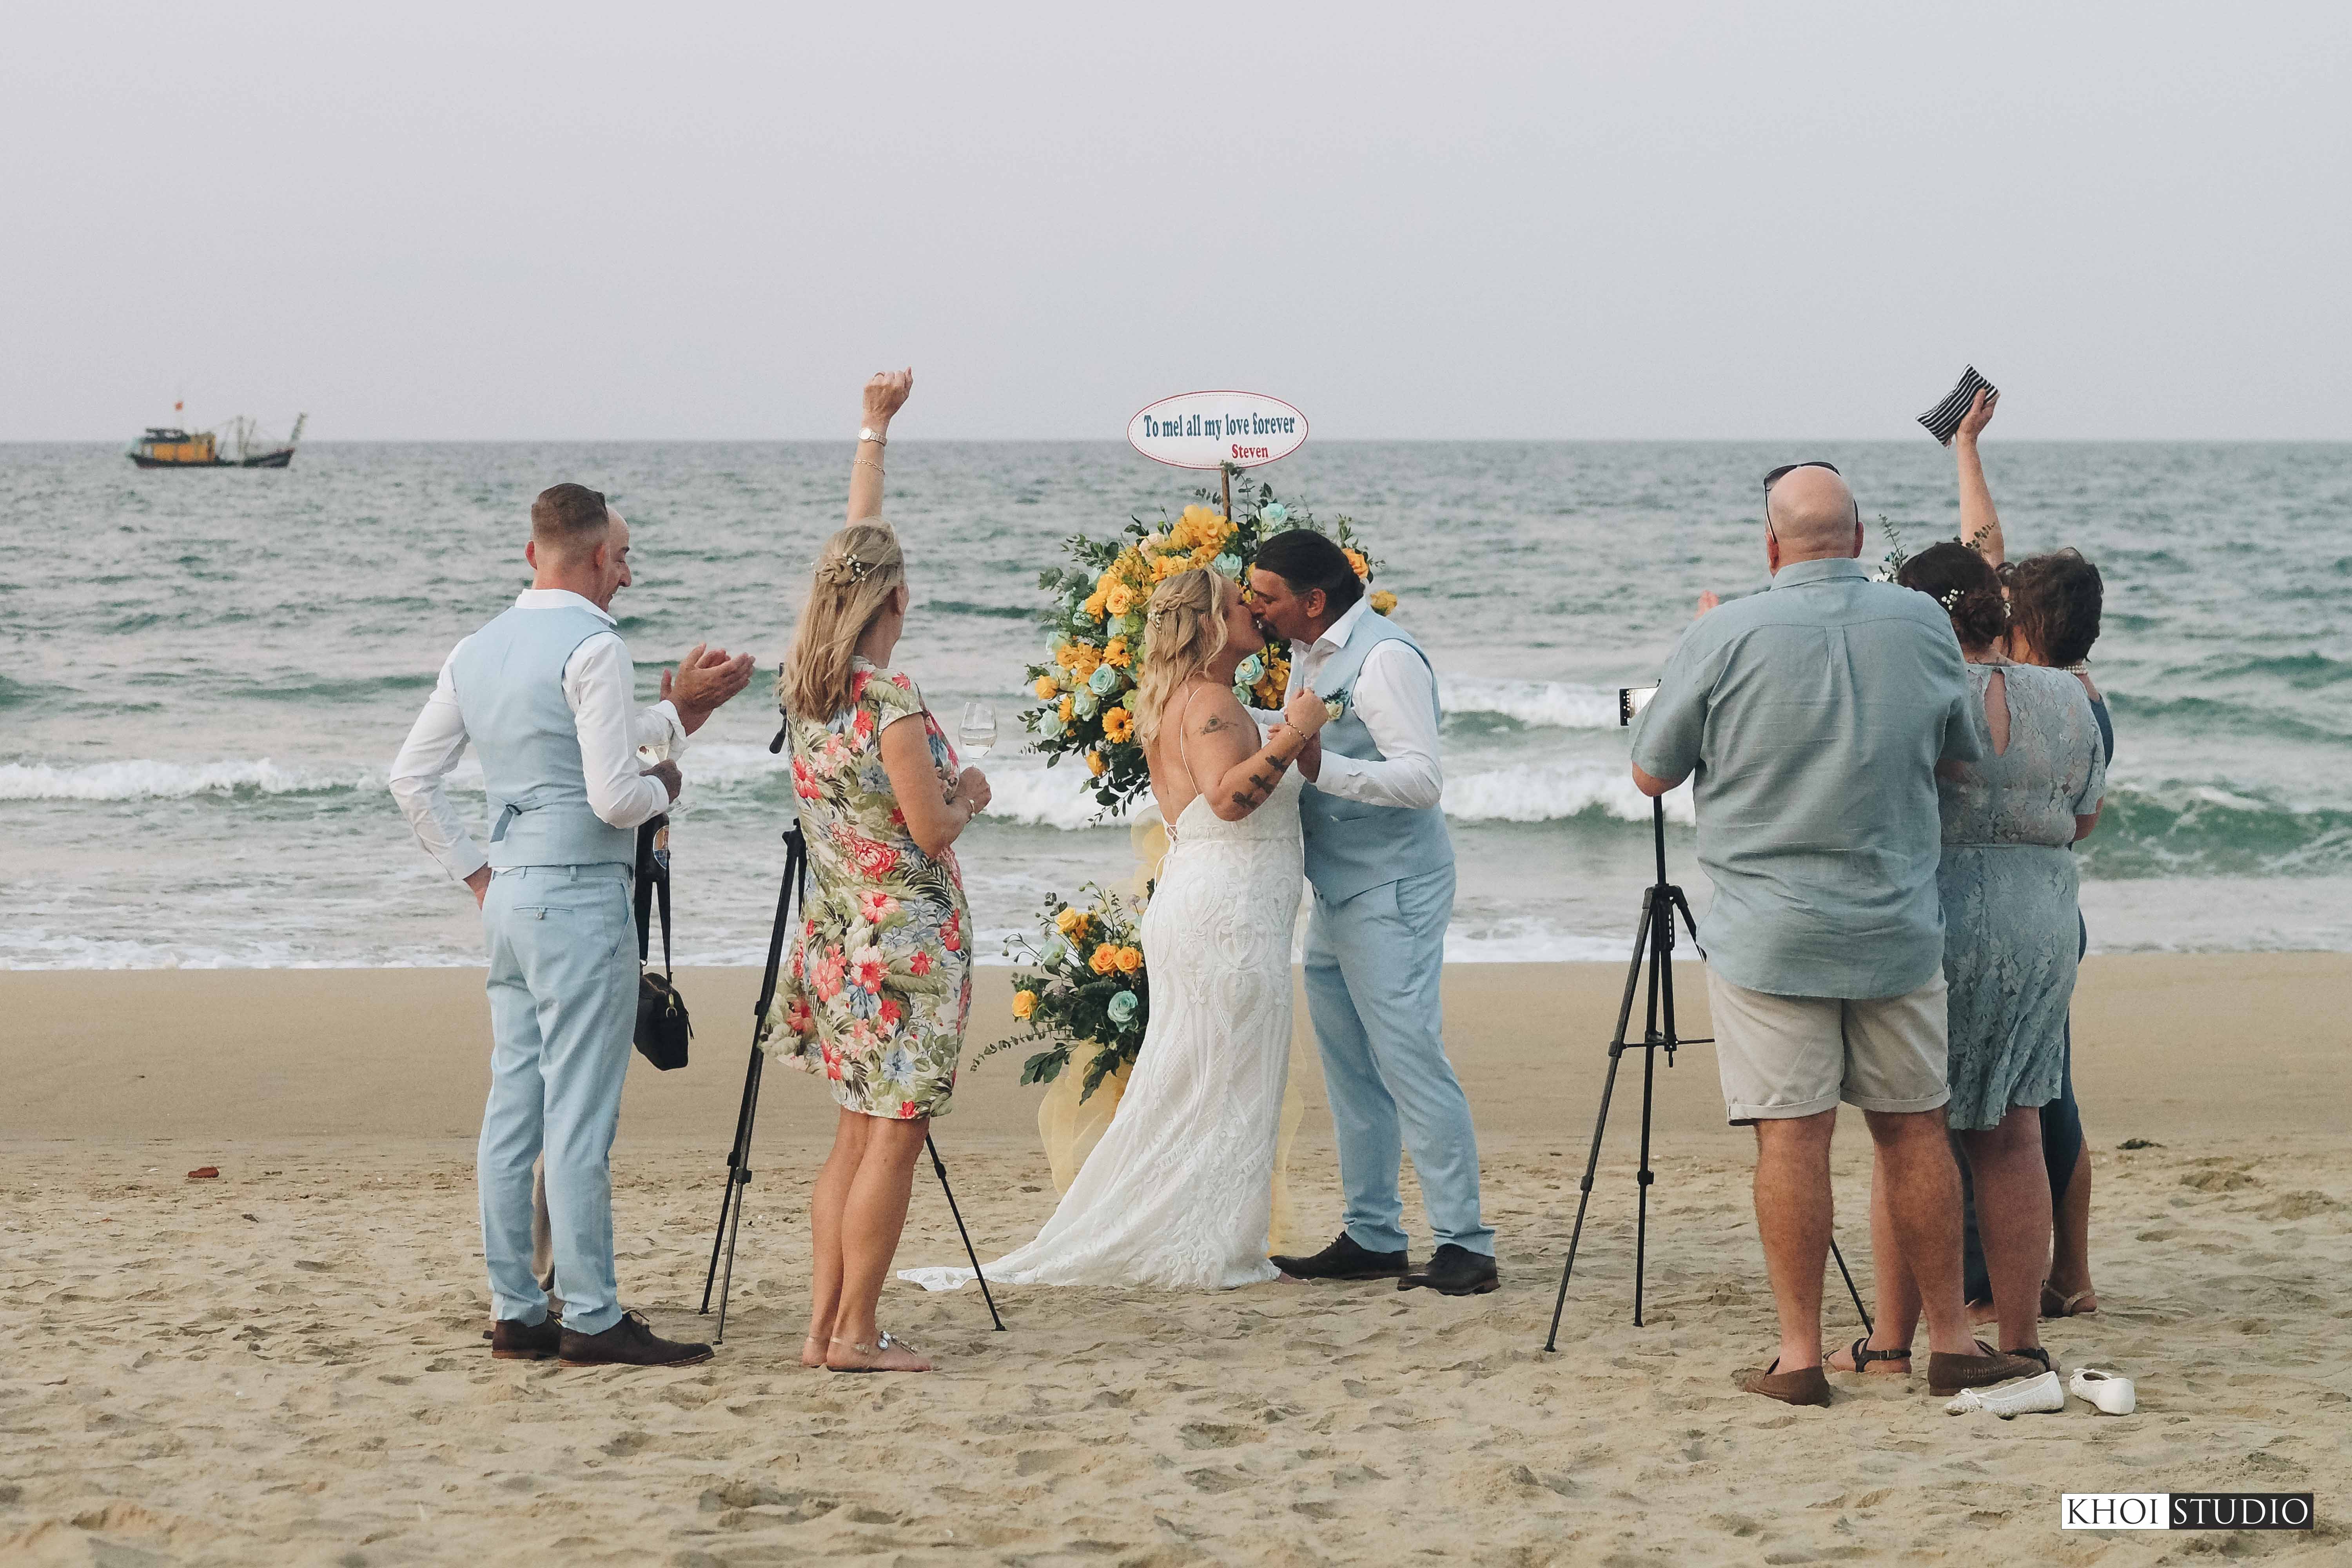 Find a wedding photographer in Da Nang & Hoi An: Organize your wedding day at An Bang beach